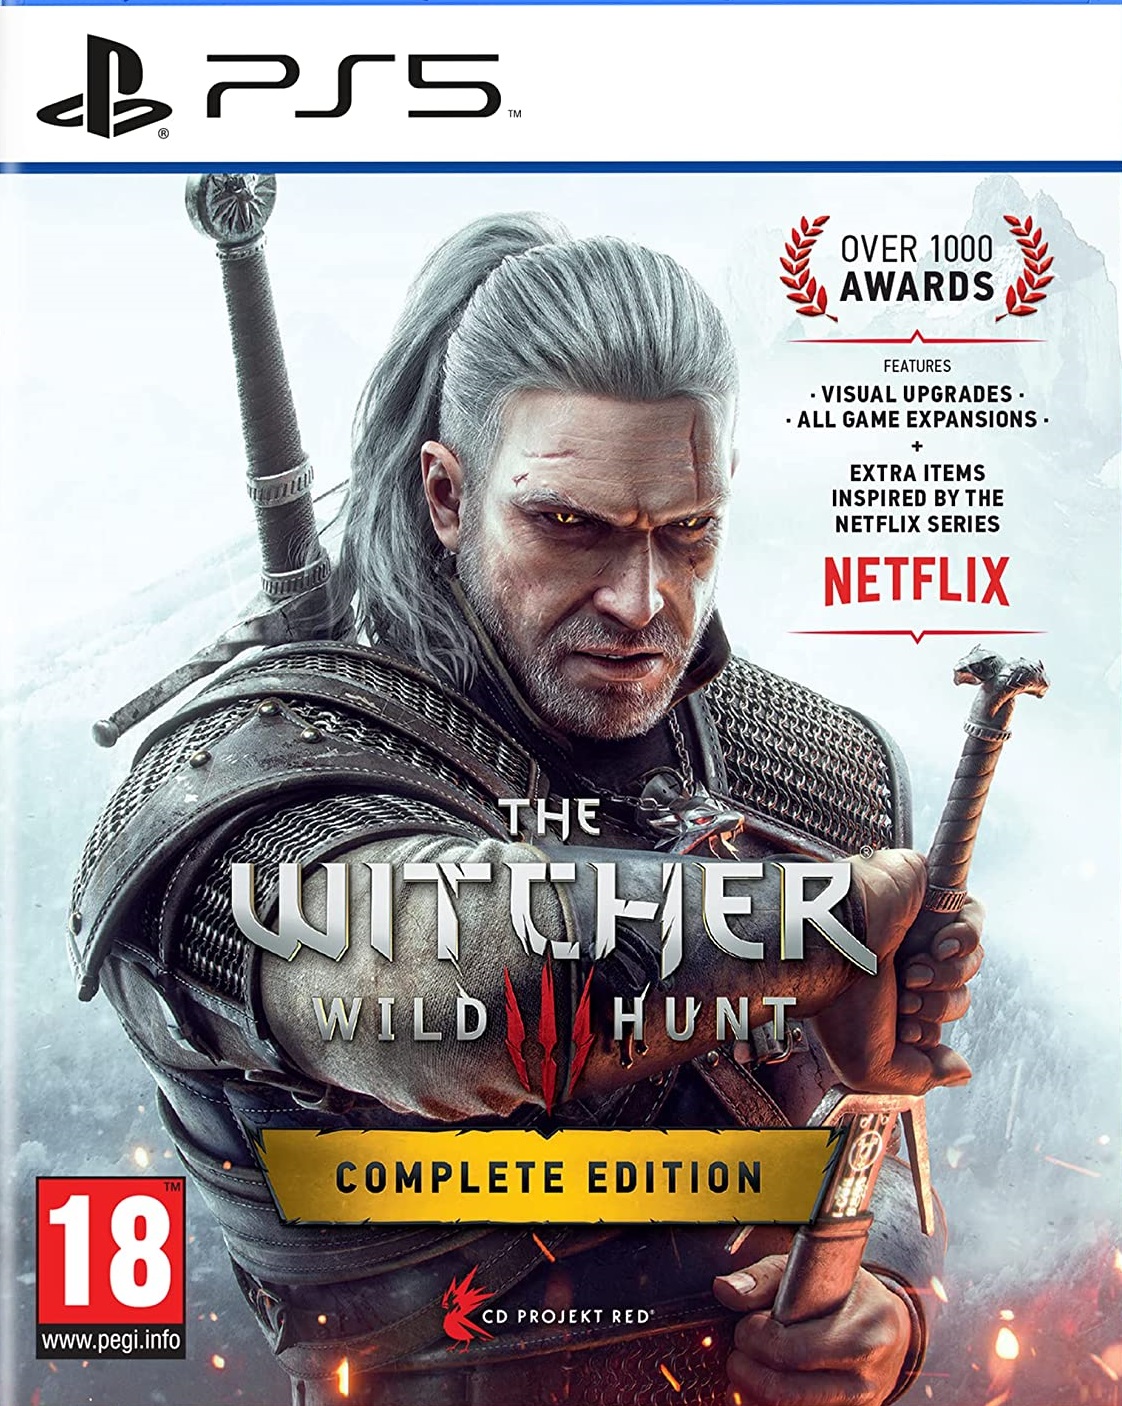 Witcher 3 Wild Hunt (Ведьмак 3: Дикая охота) Complete Edition PS5